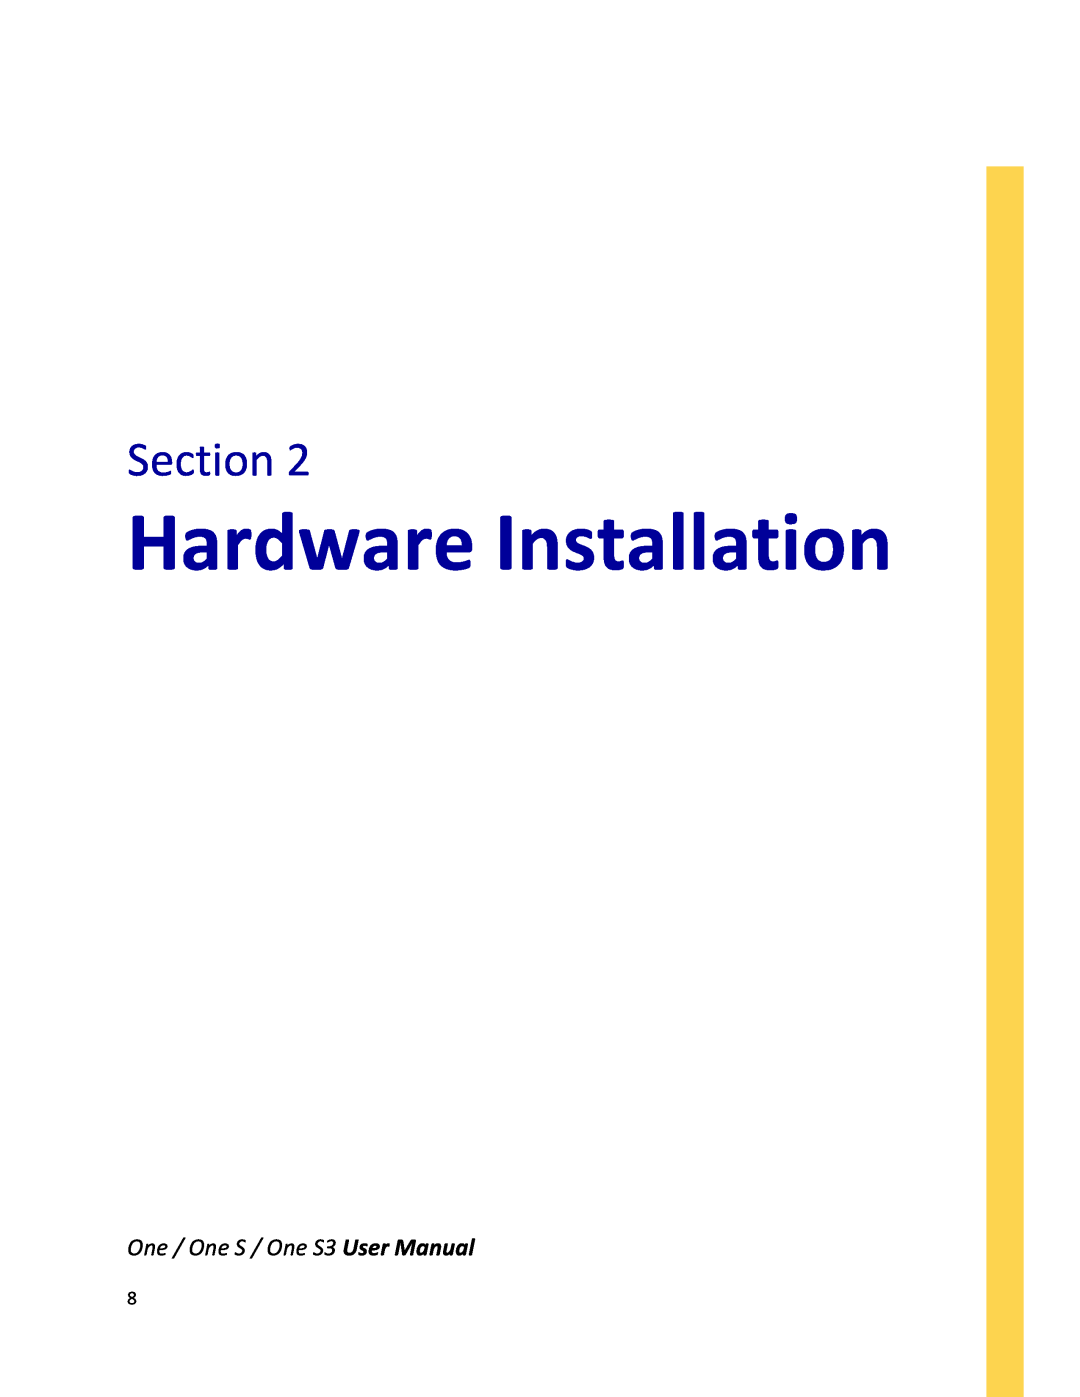 Antec ONE S3 user manual Hardware Installation, Section, One / One S / One S3 User Manual 